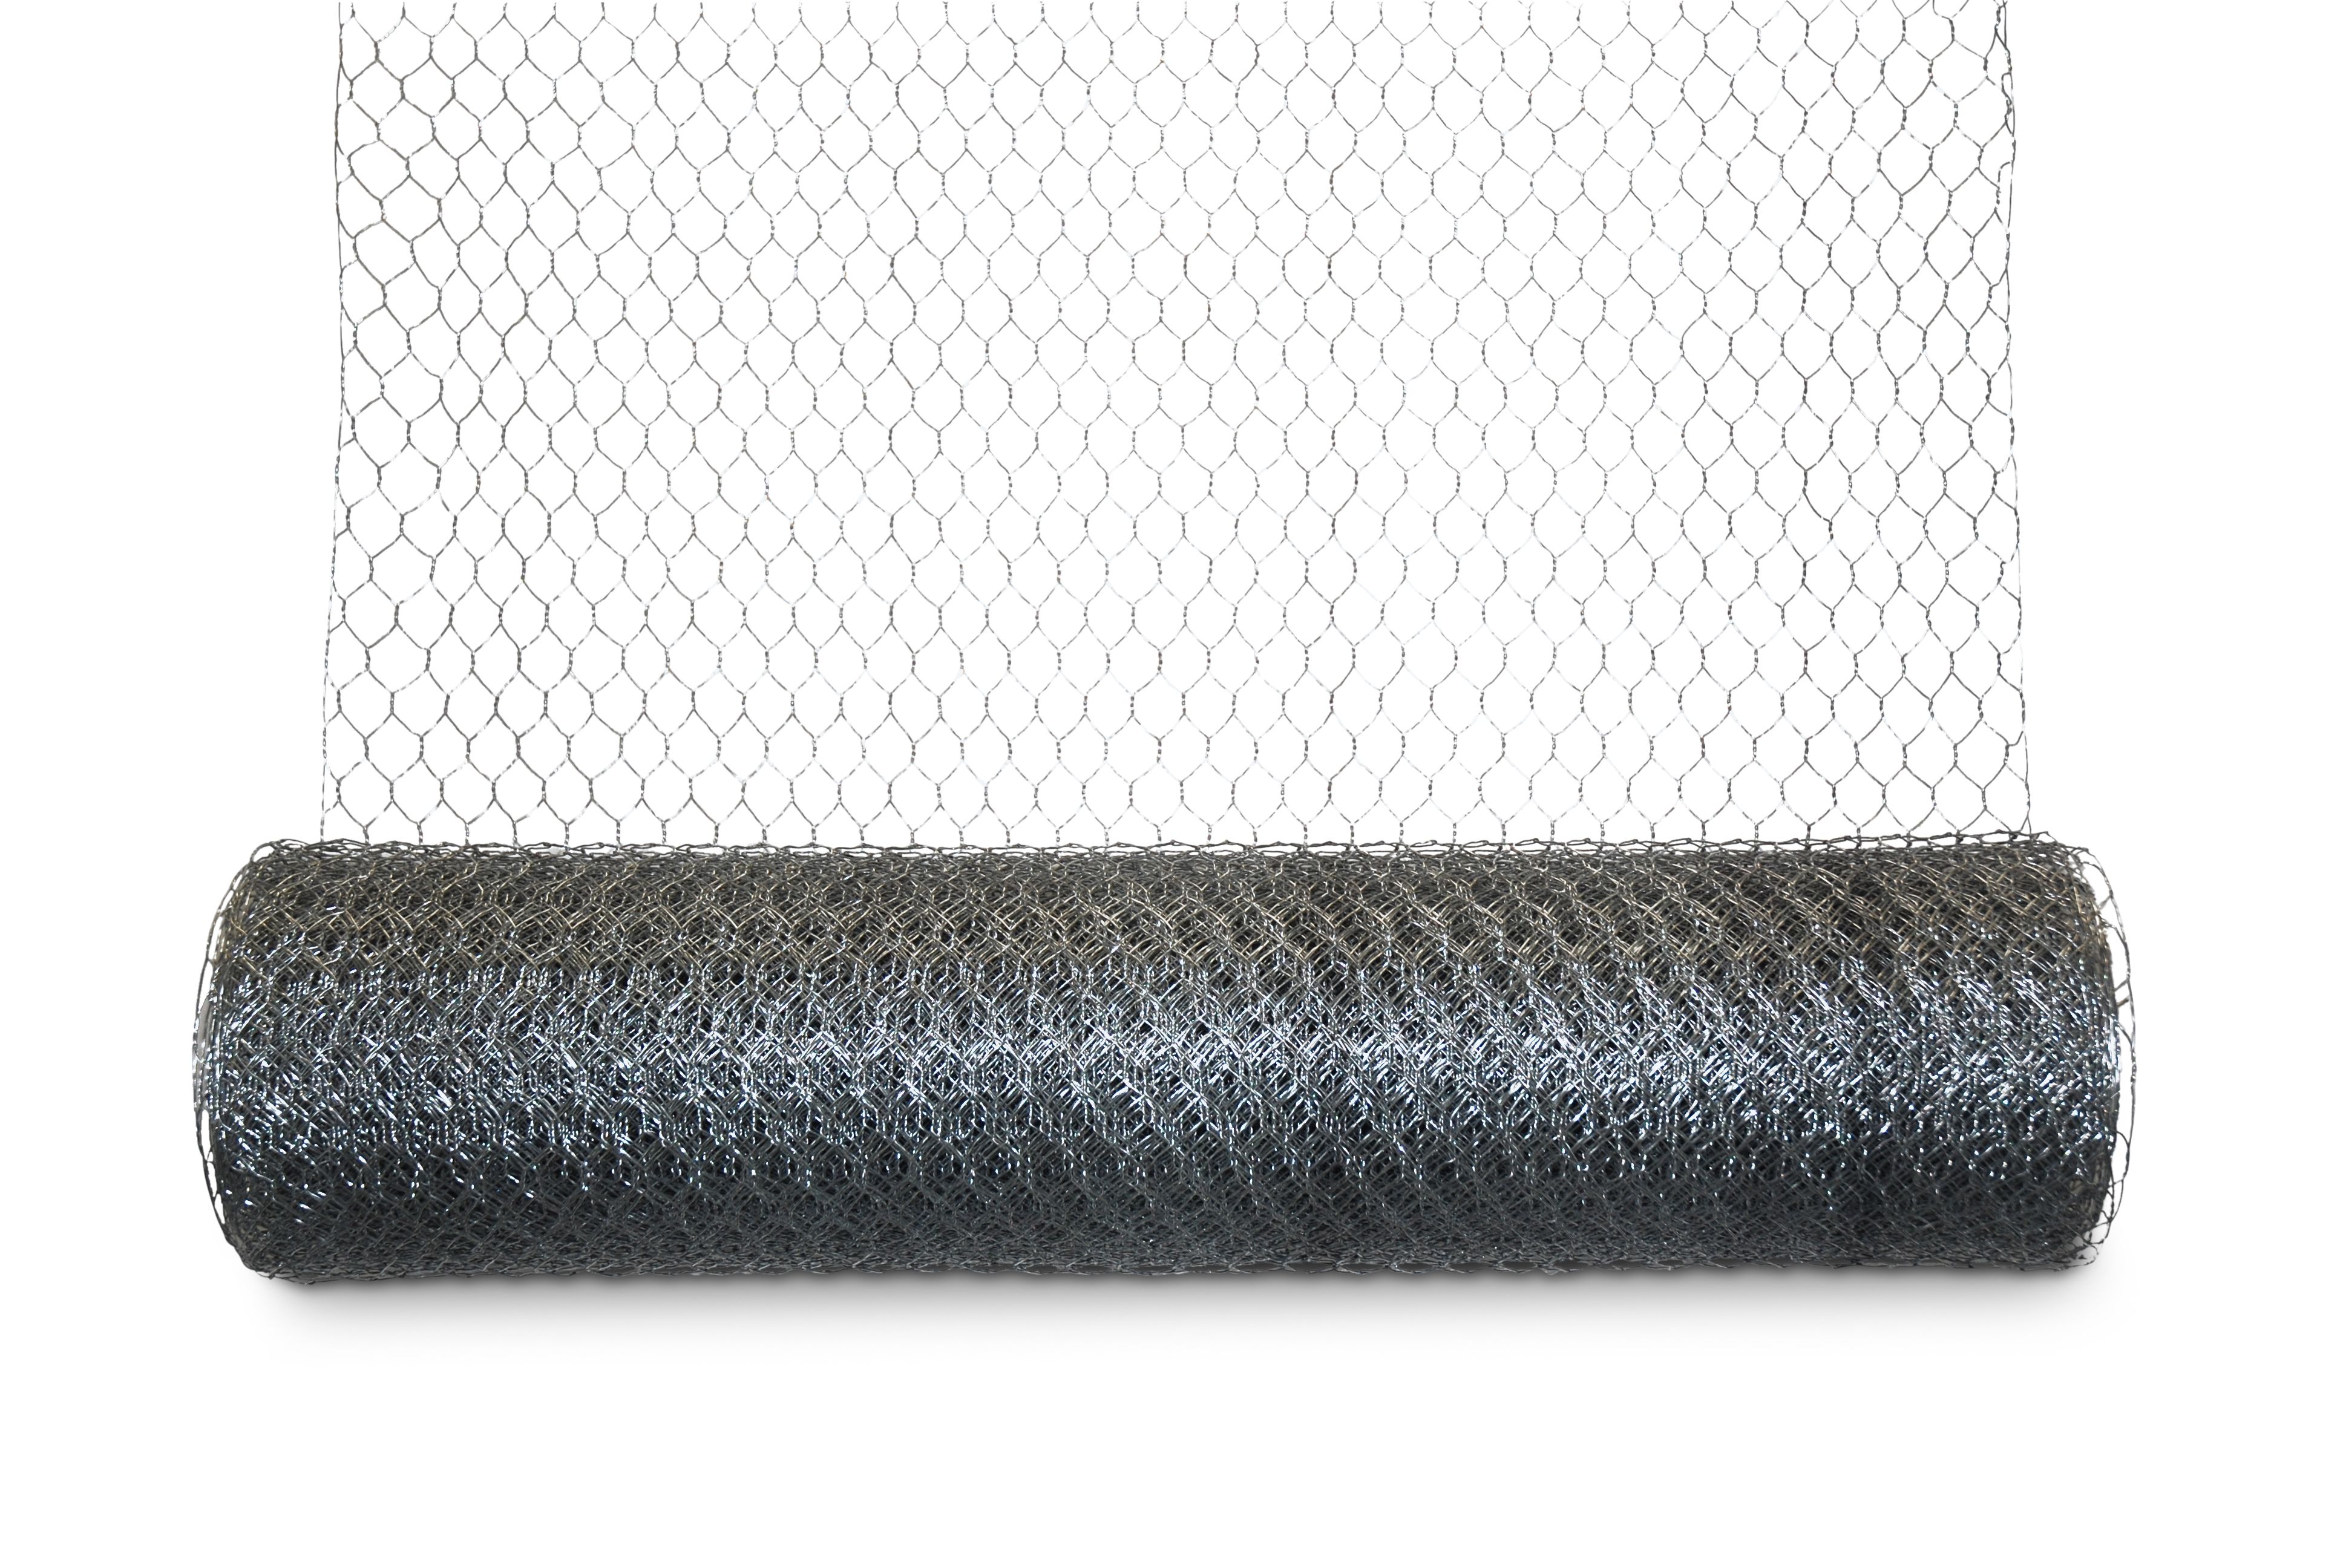 Blooma Galvanised Steel Triple torsion mesh, (L)25m (H)1m